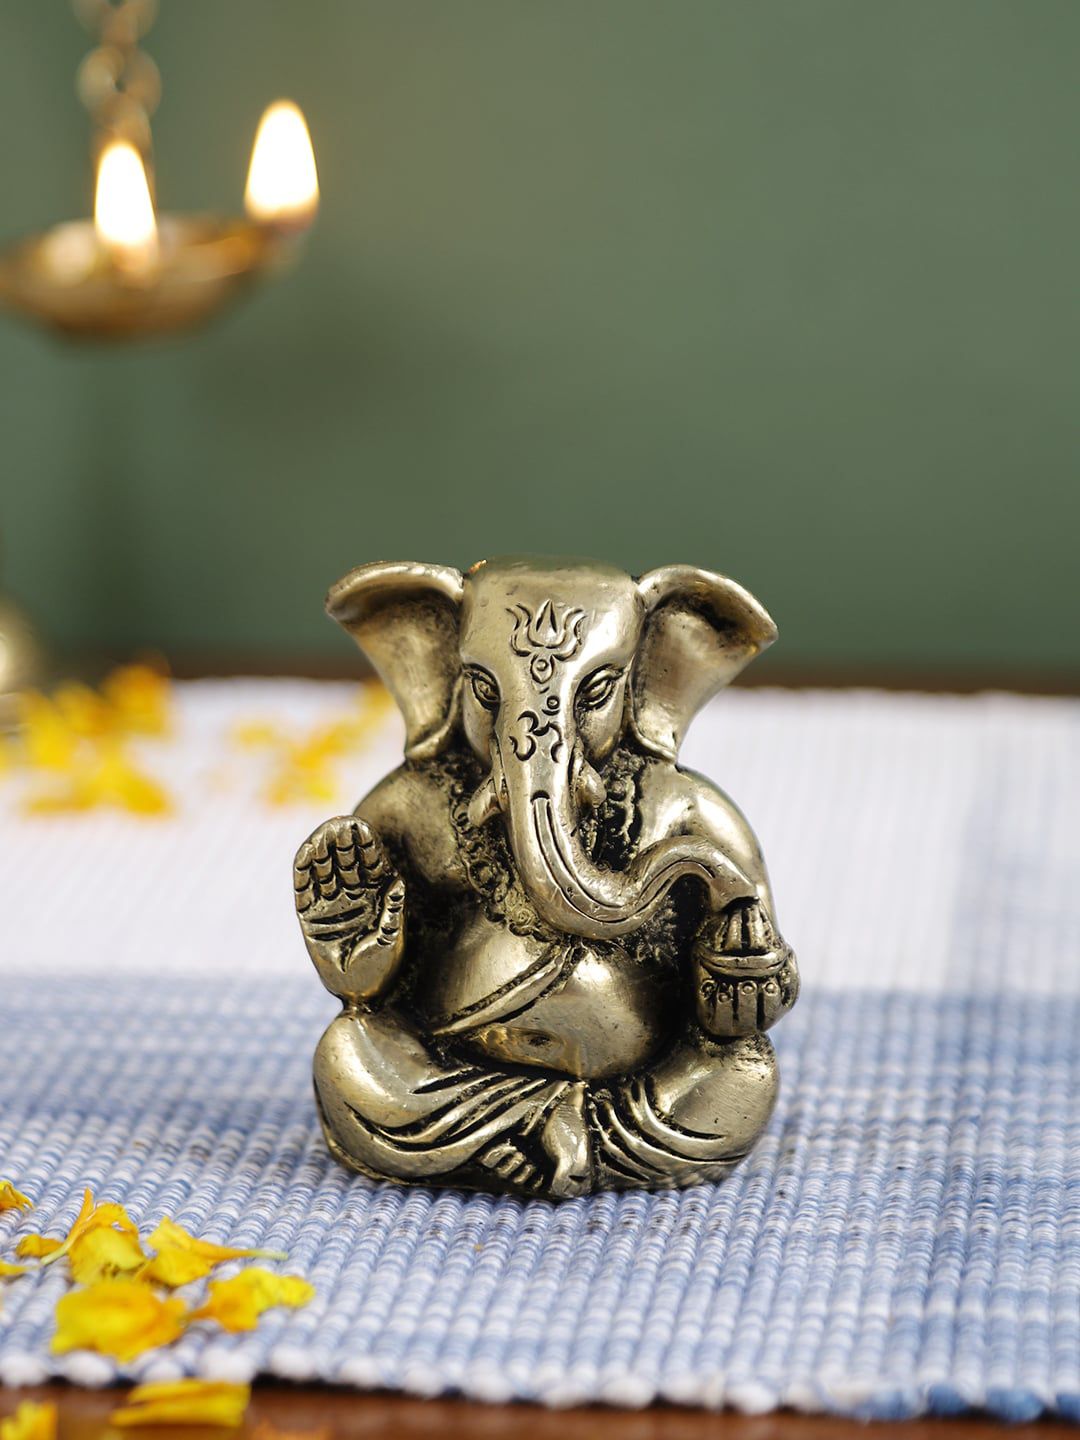 Imli Street Gold-Toned Ganesh 2 Hands Showpiece Price in India